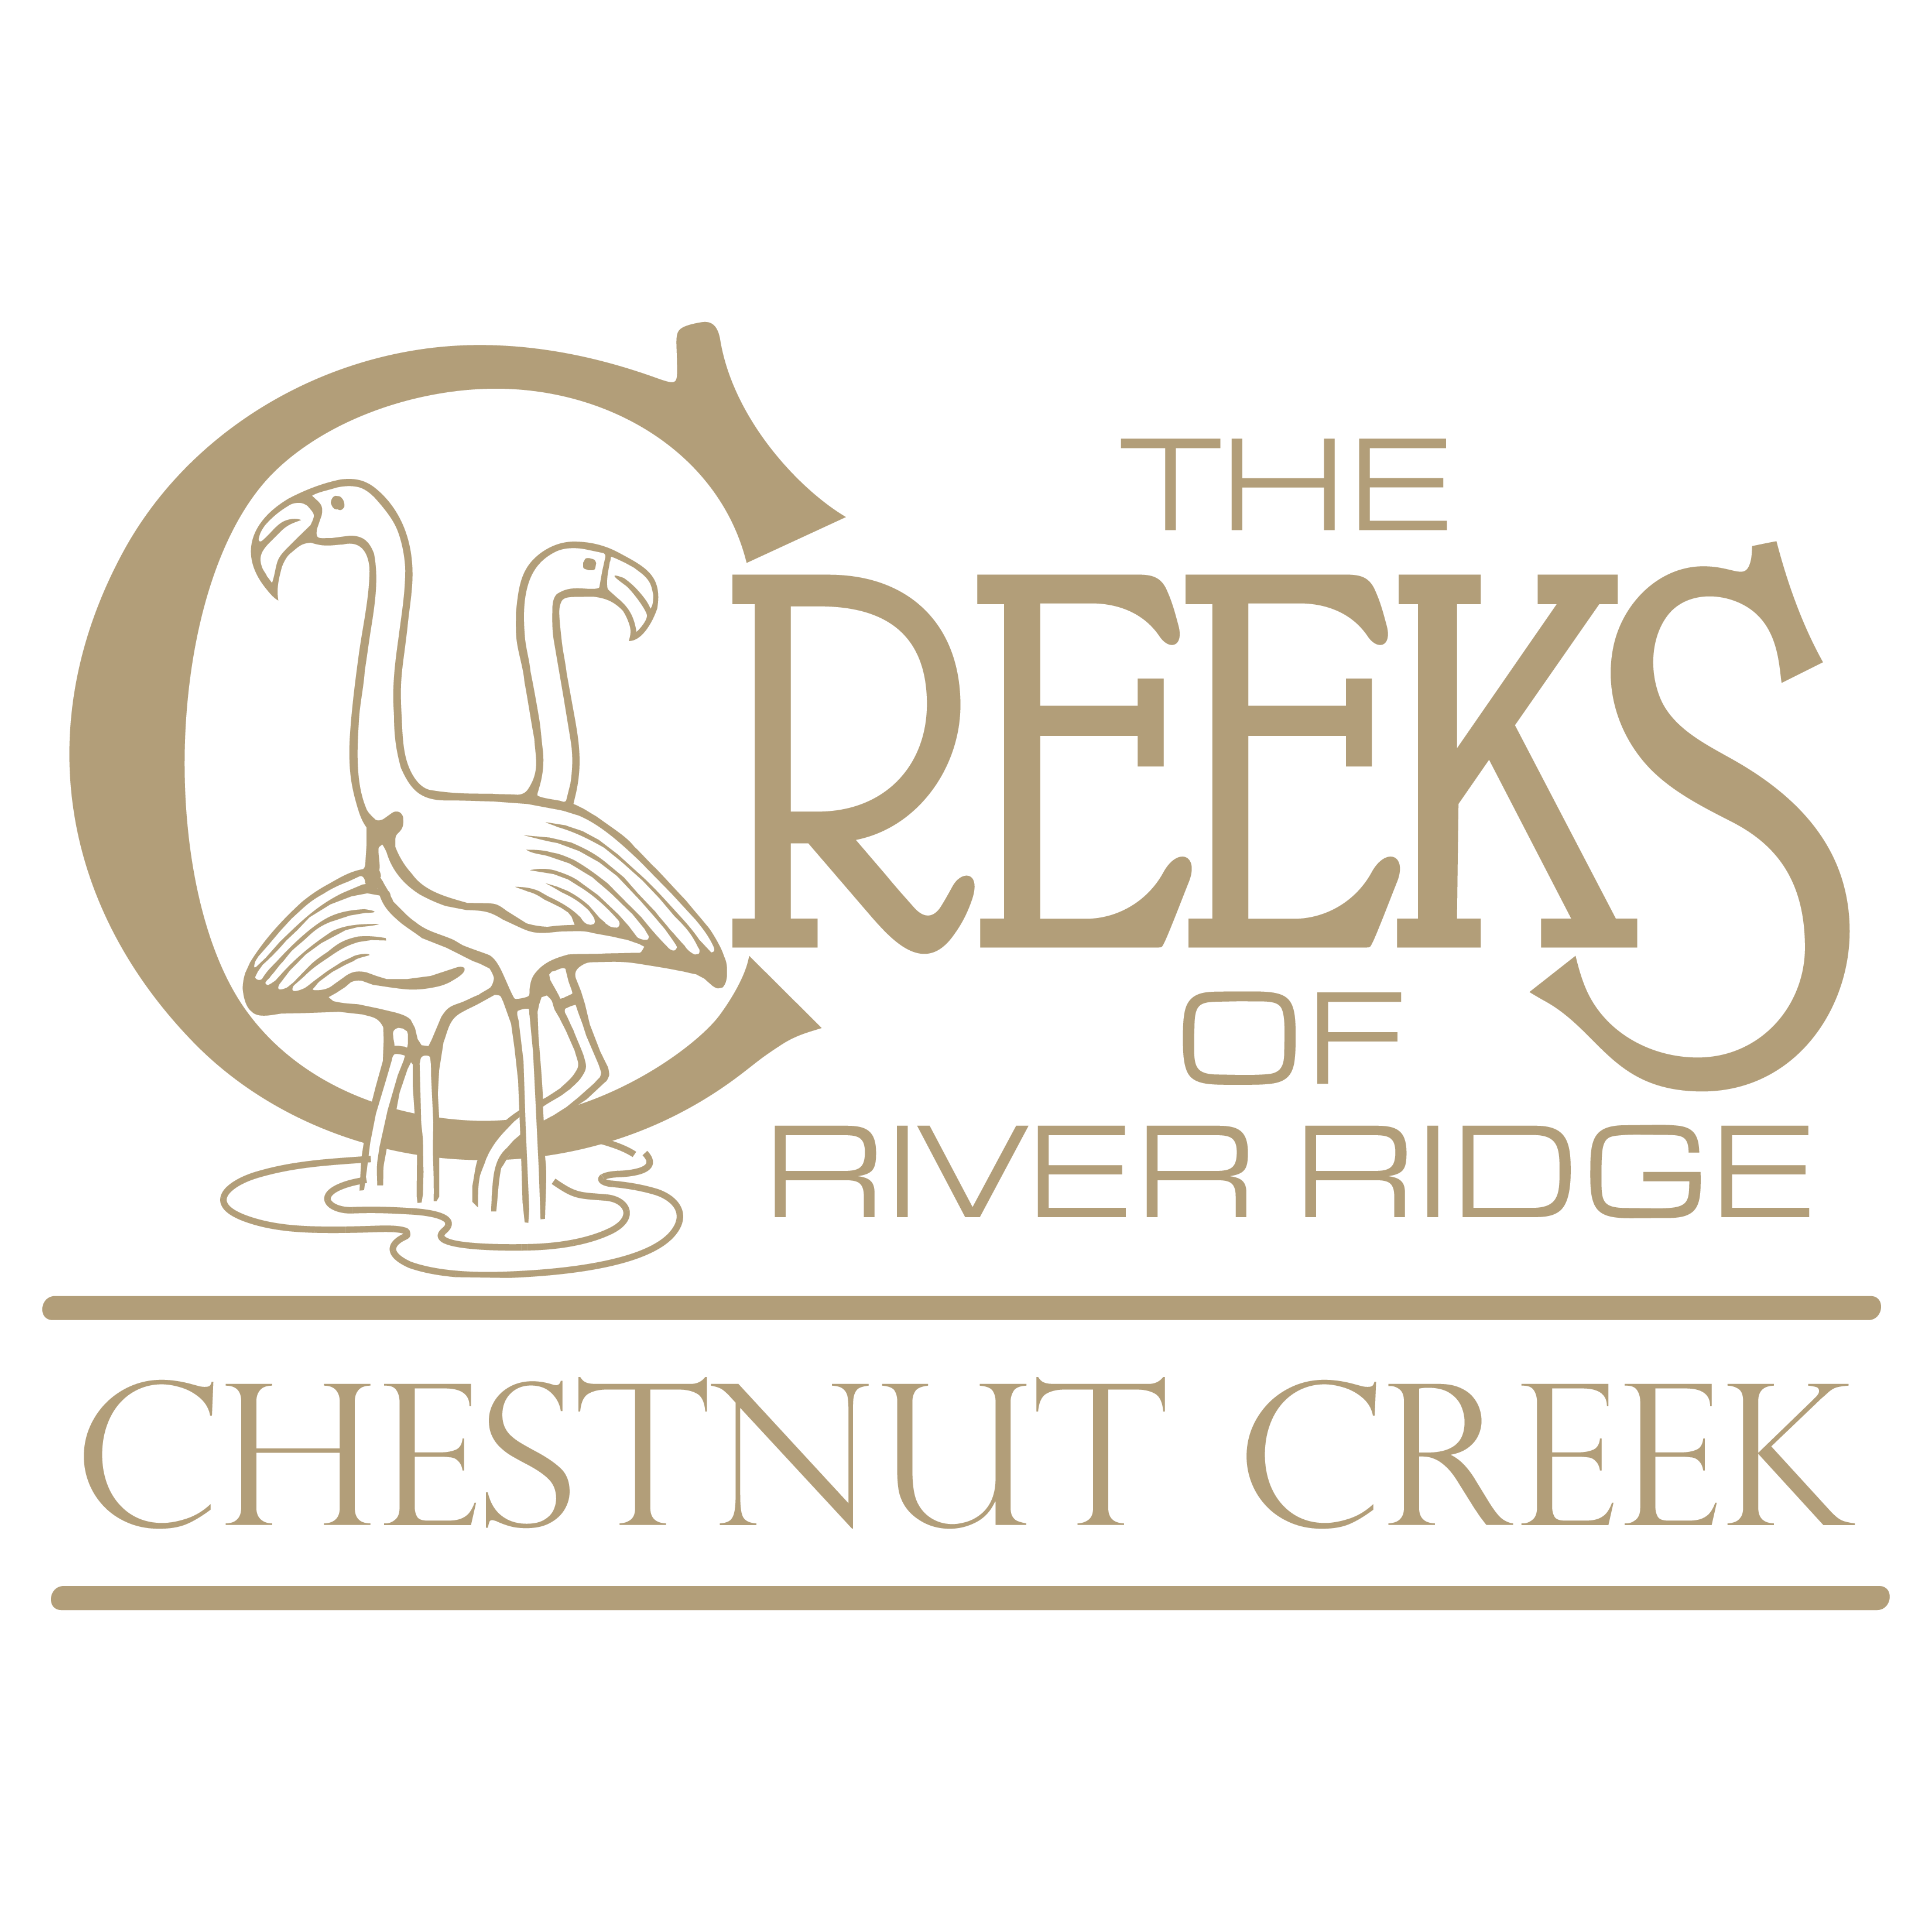 Chestnut Creek